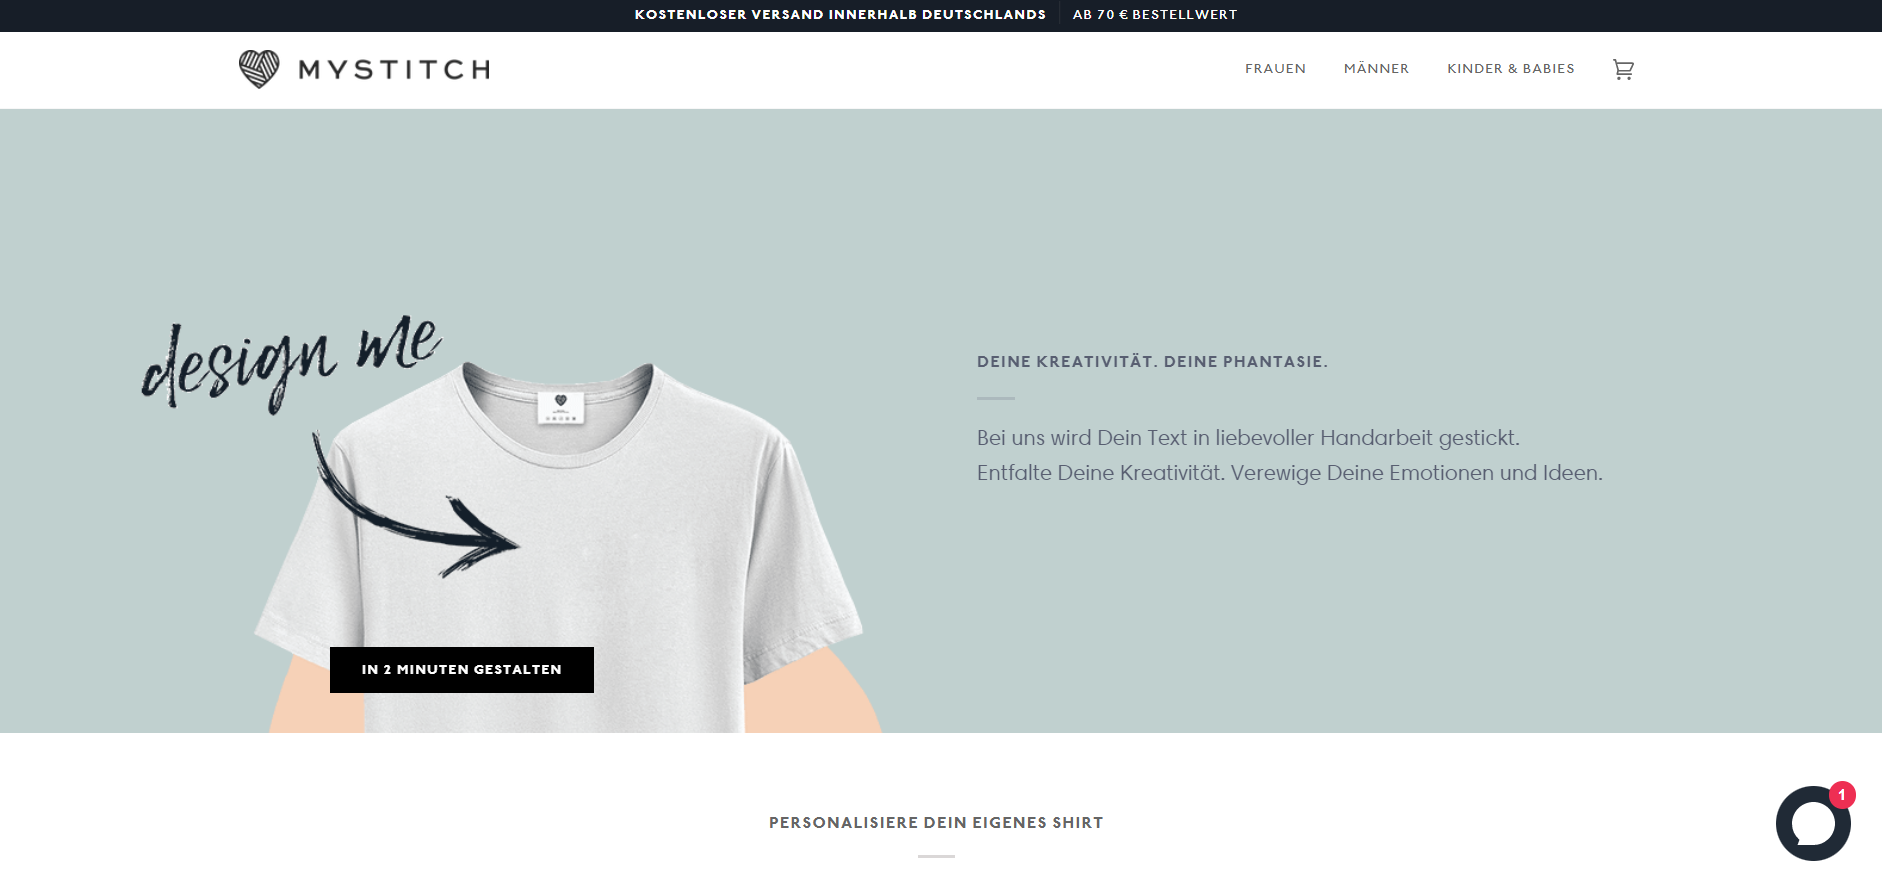 Die Website des Fashion E-Commerce MYSTITCH.